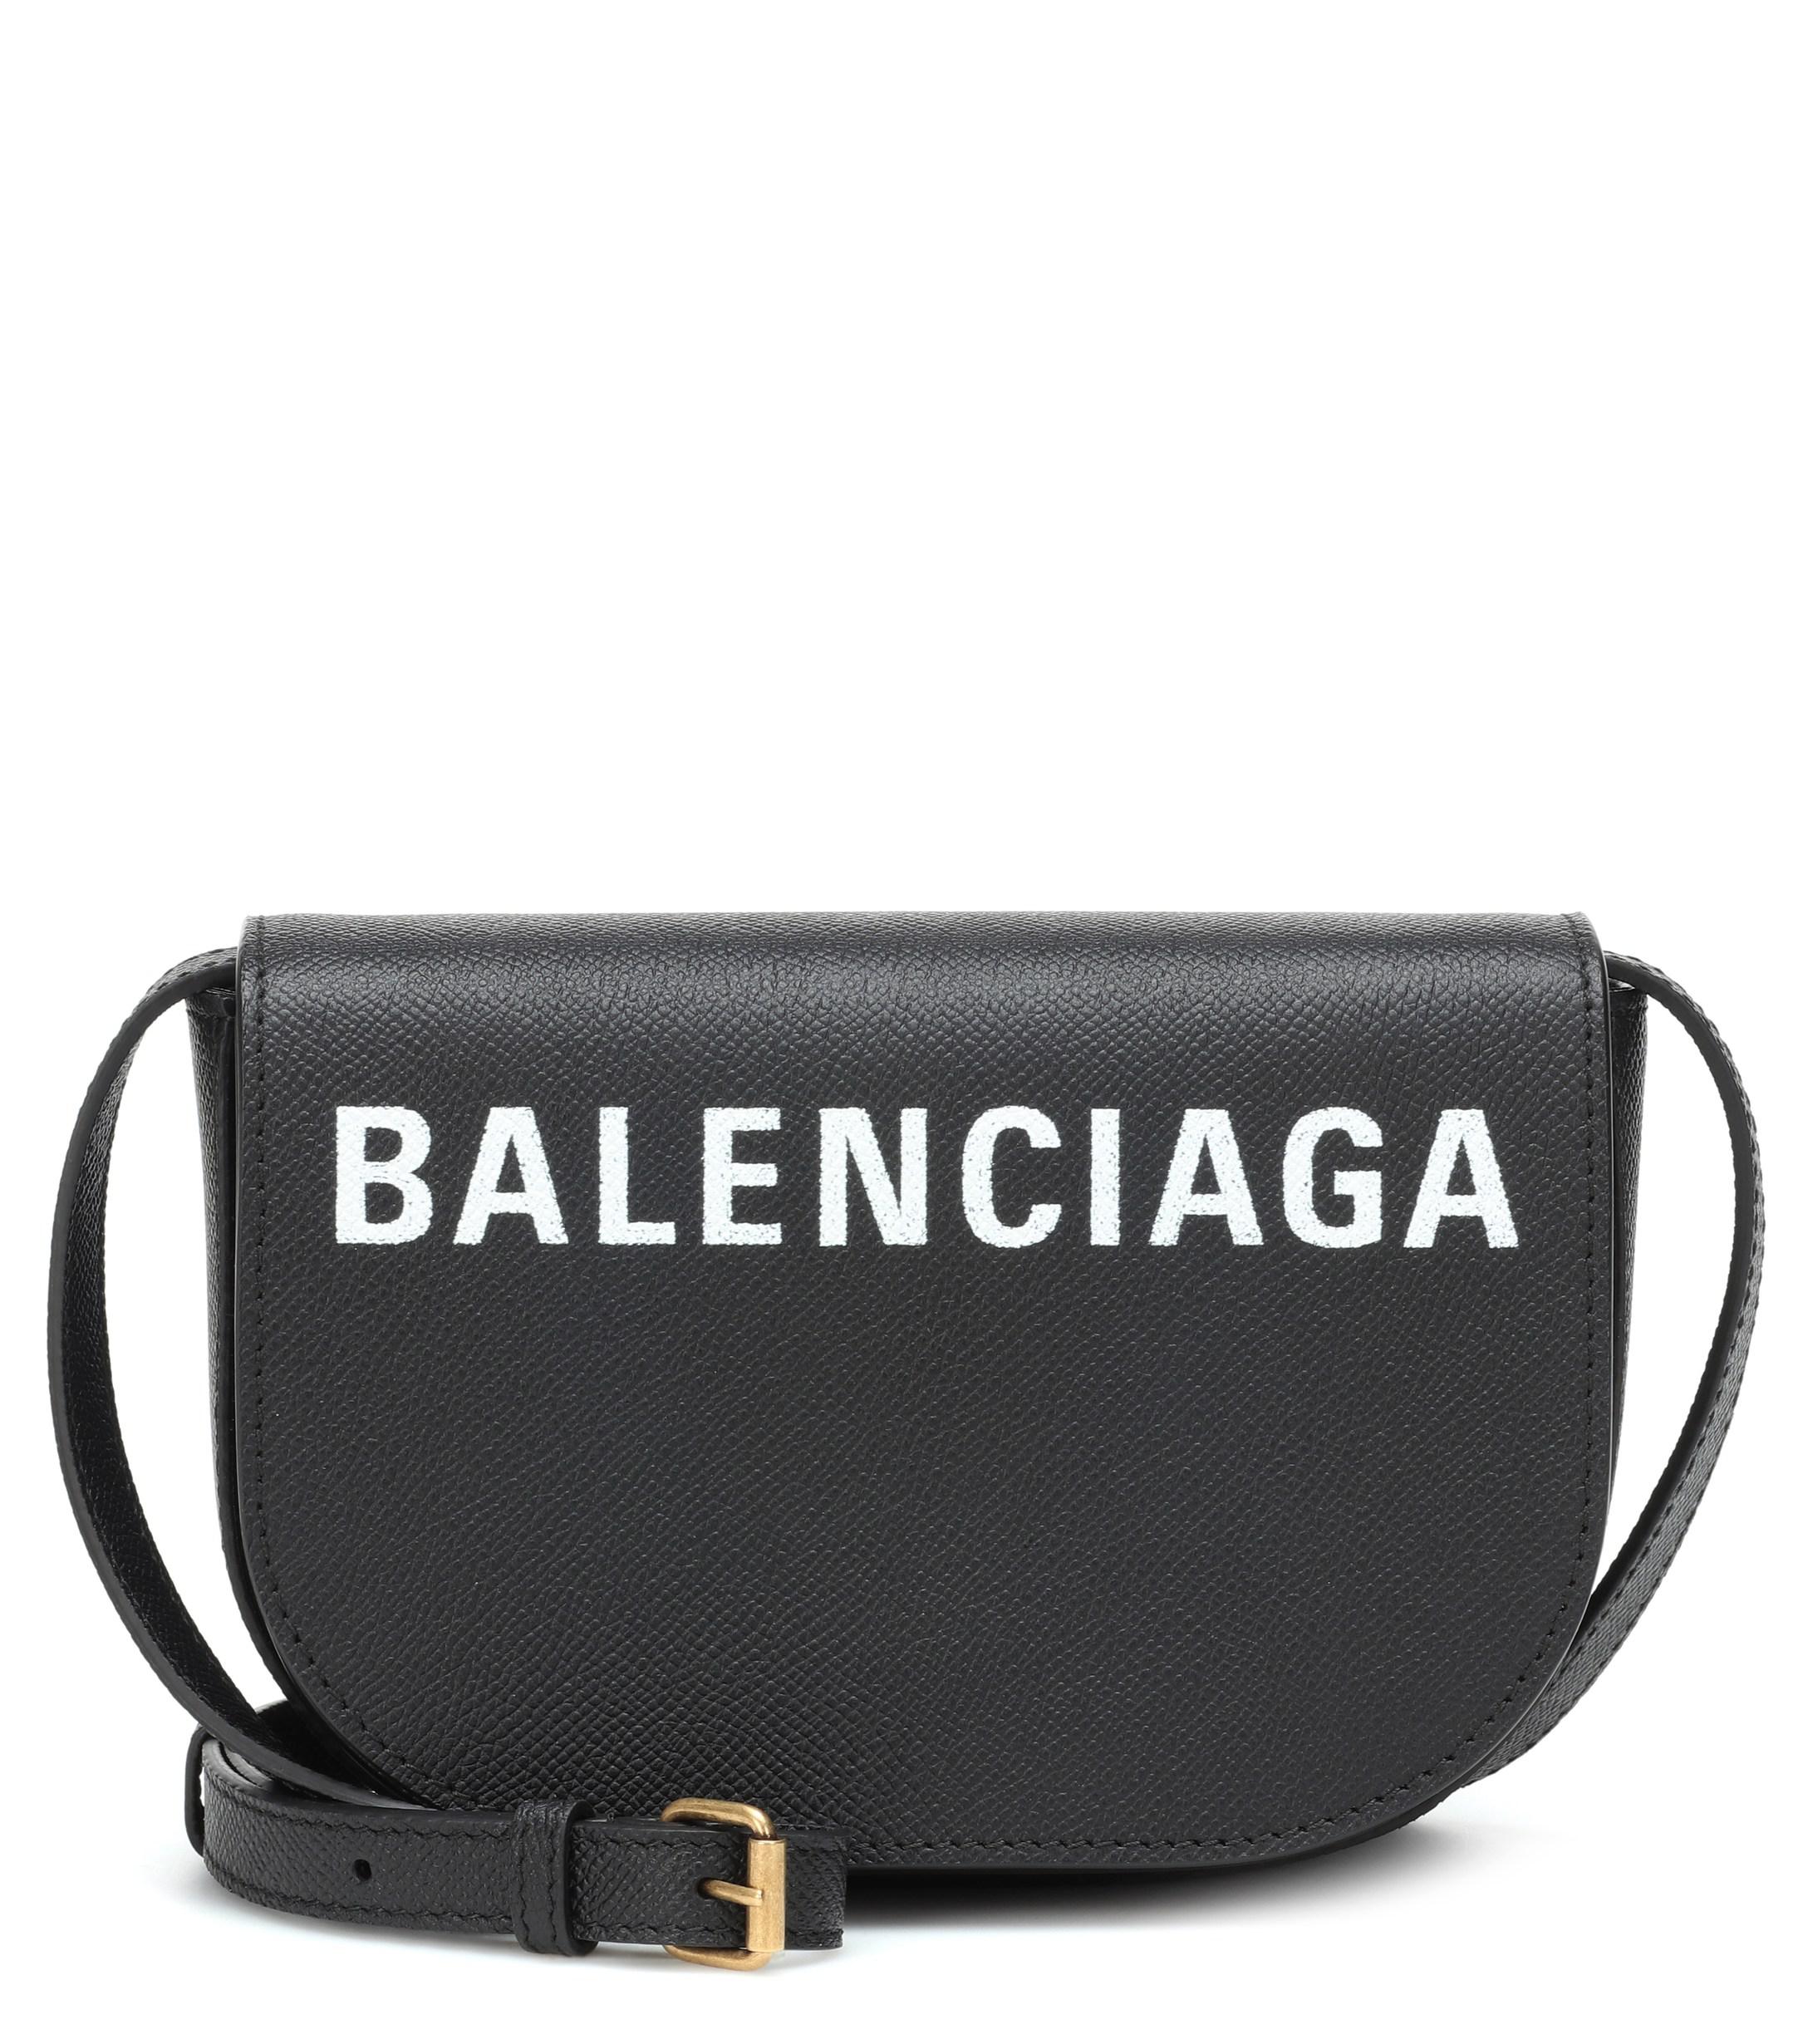 Balenciaga Ville Day Xs Leather Shoulder Bag in Black - Lyst